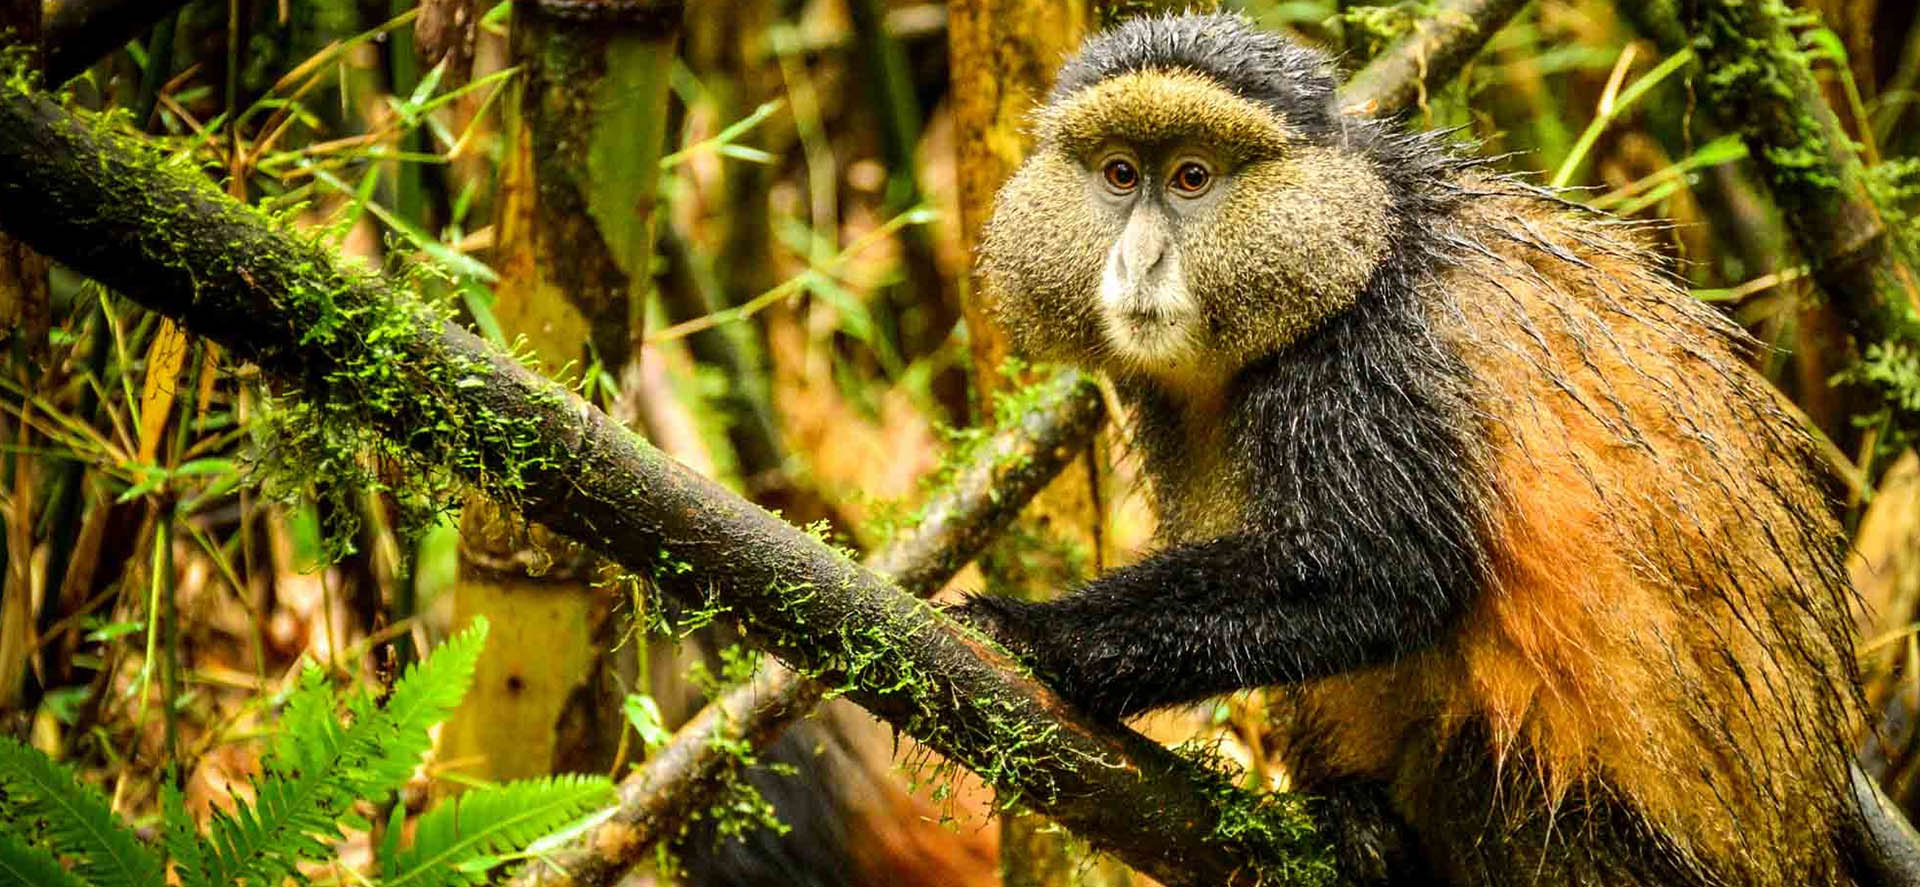 1 Day Rwanda Golden Monkey Trekking